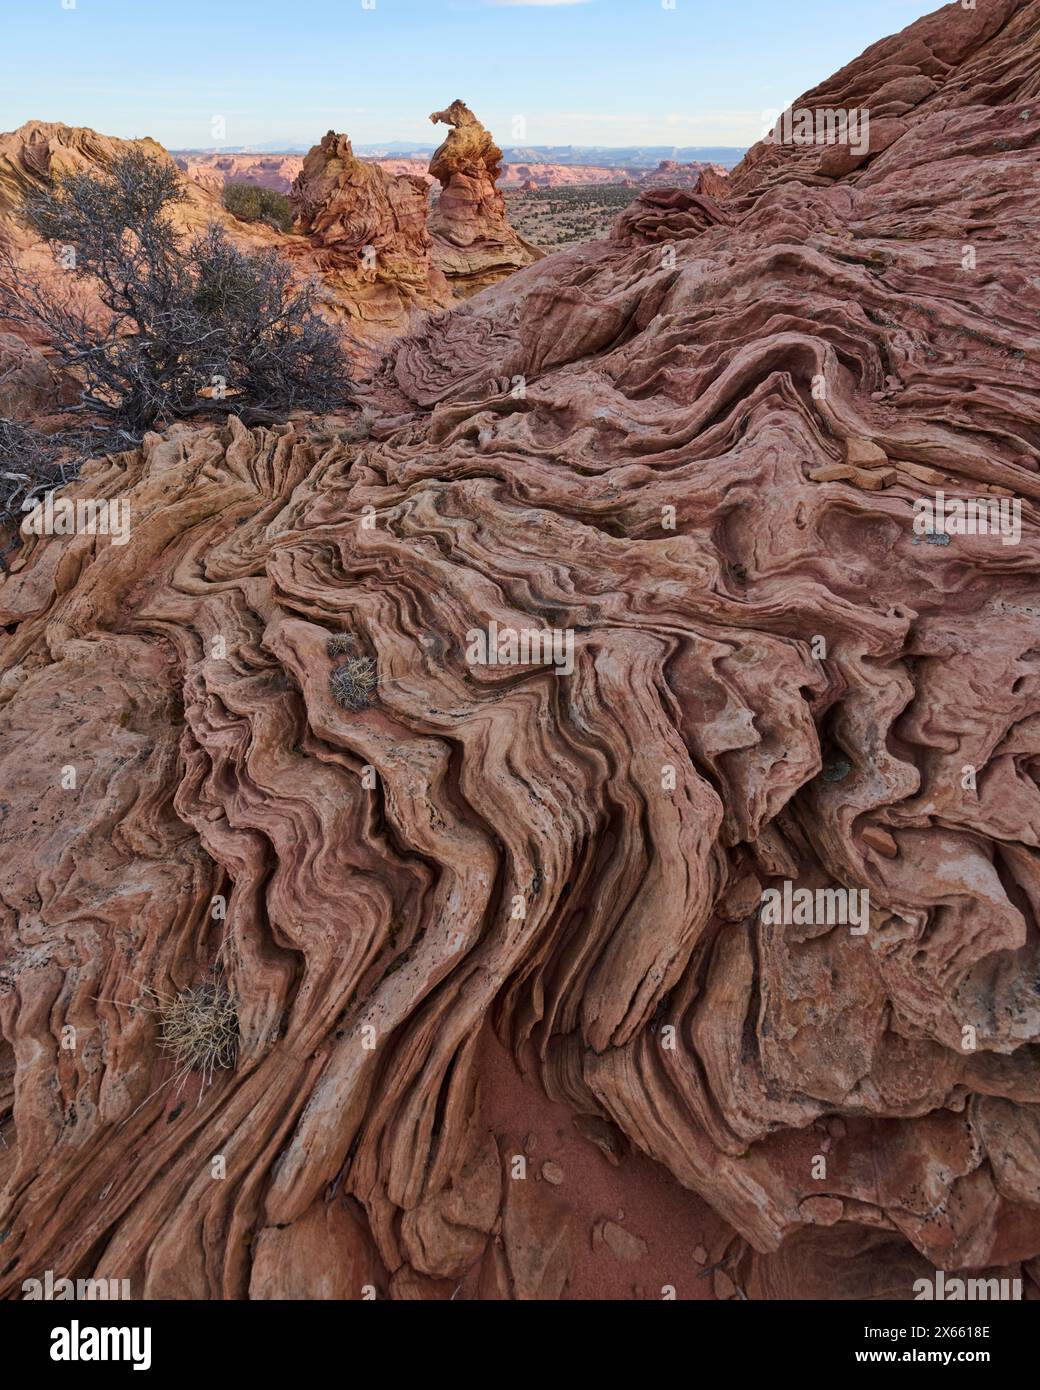 Swirled and strange rock formations in the Arizona desert of Coy Stock Photo